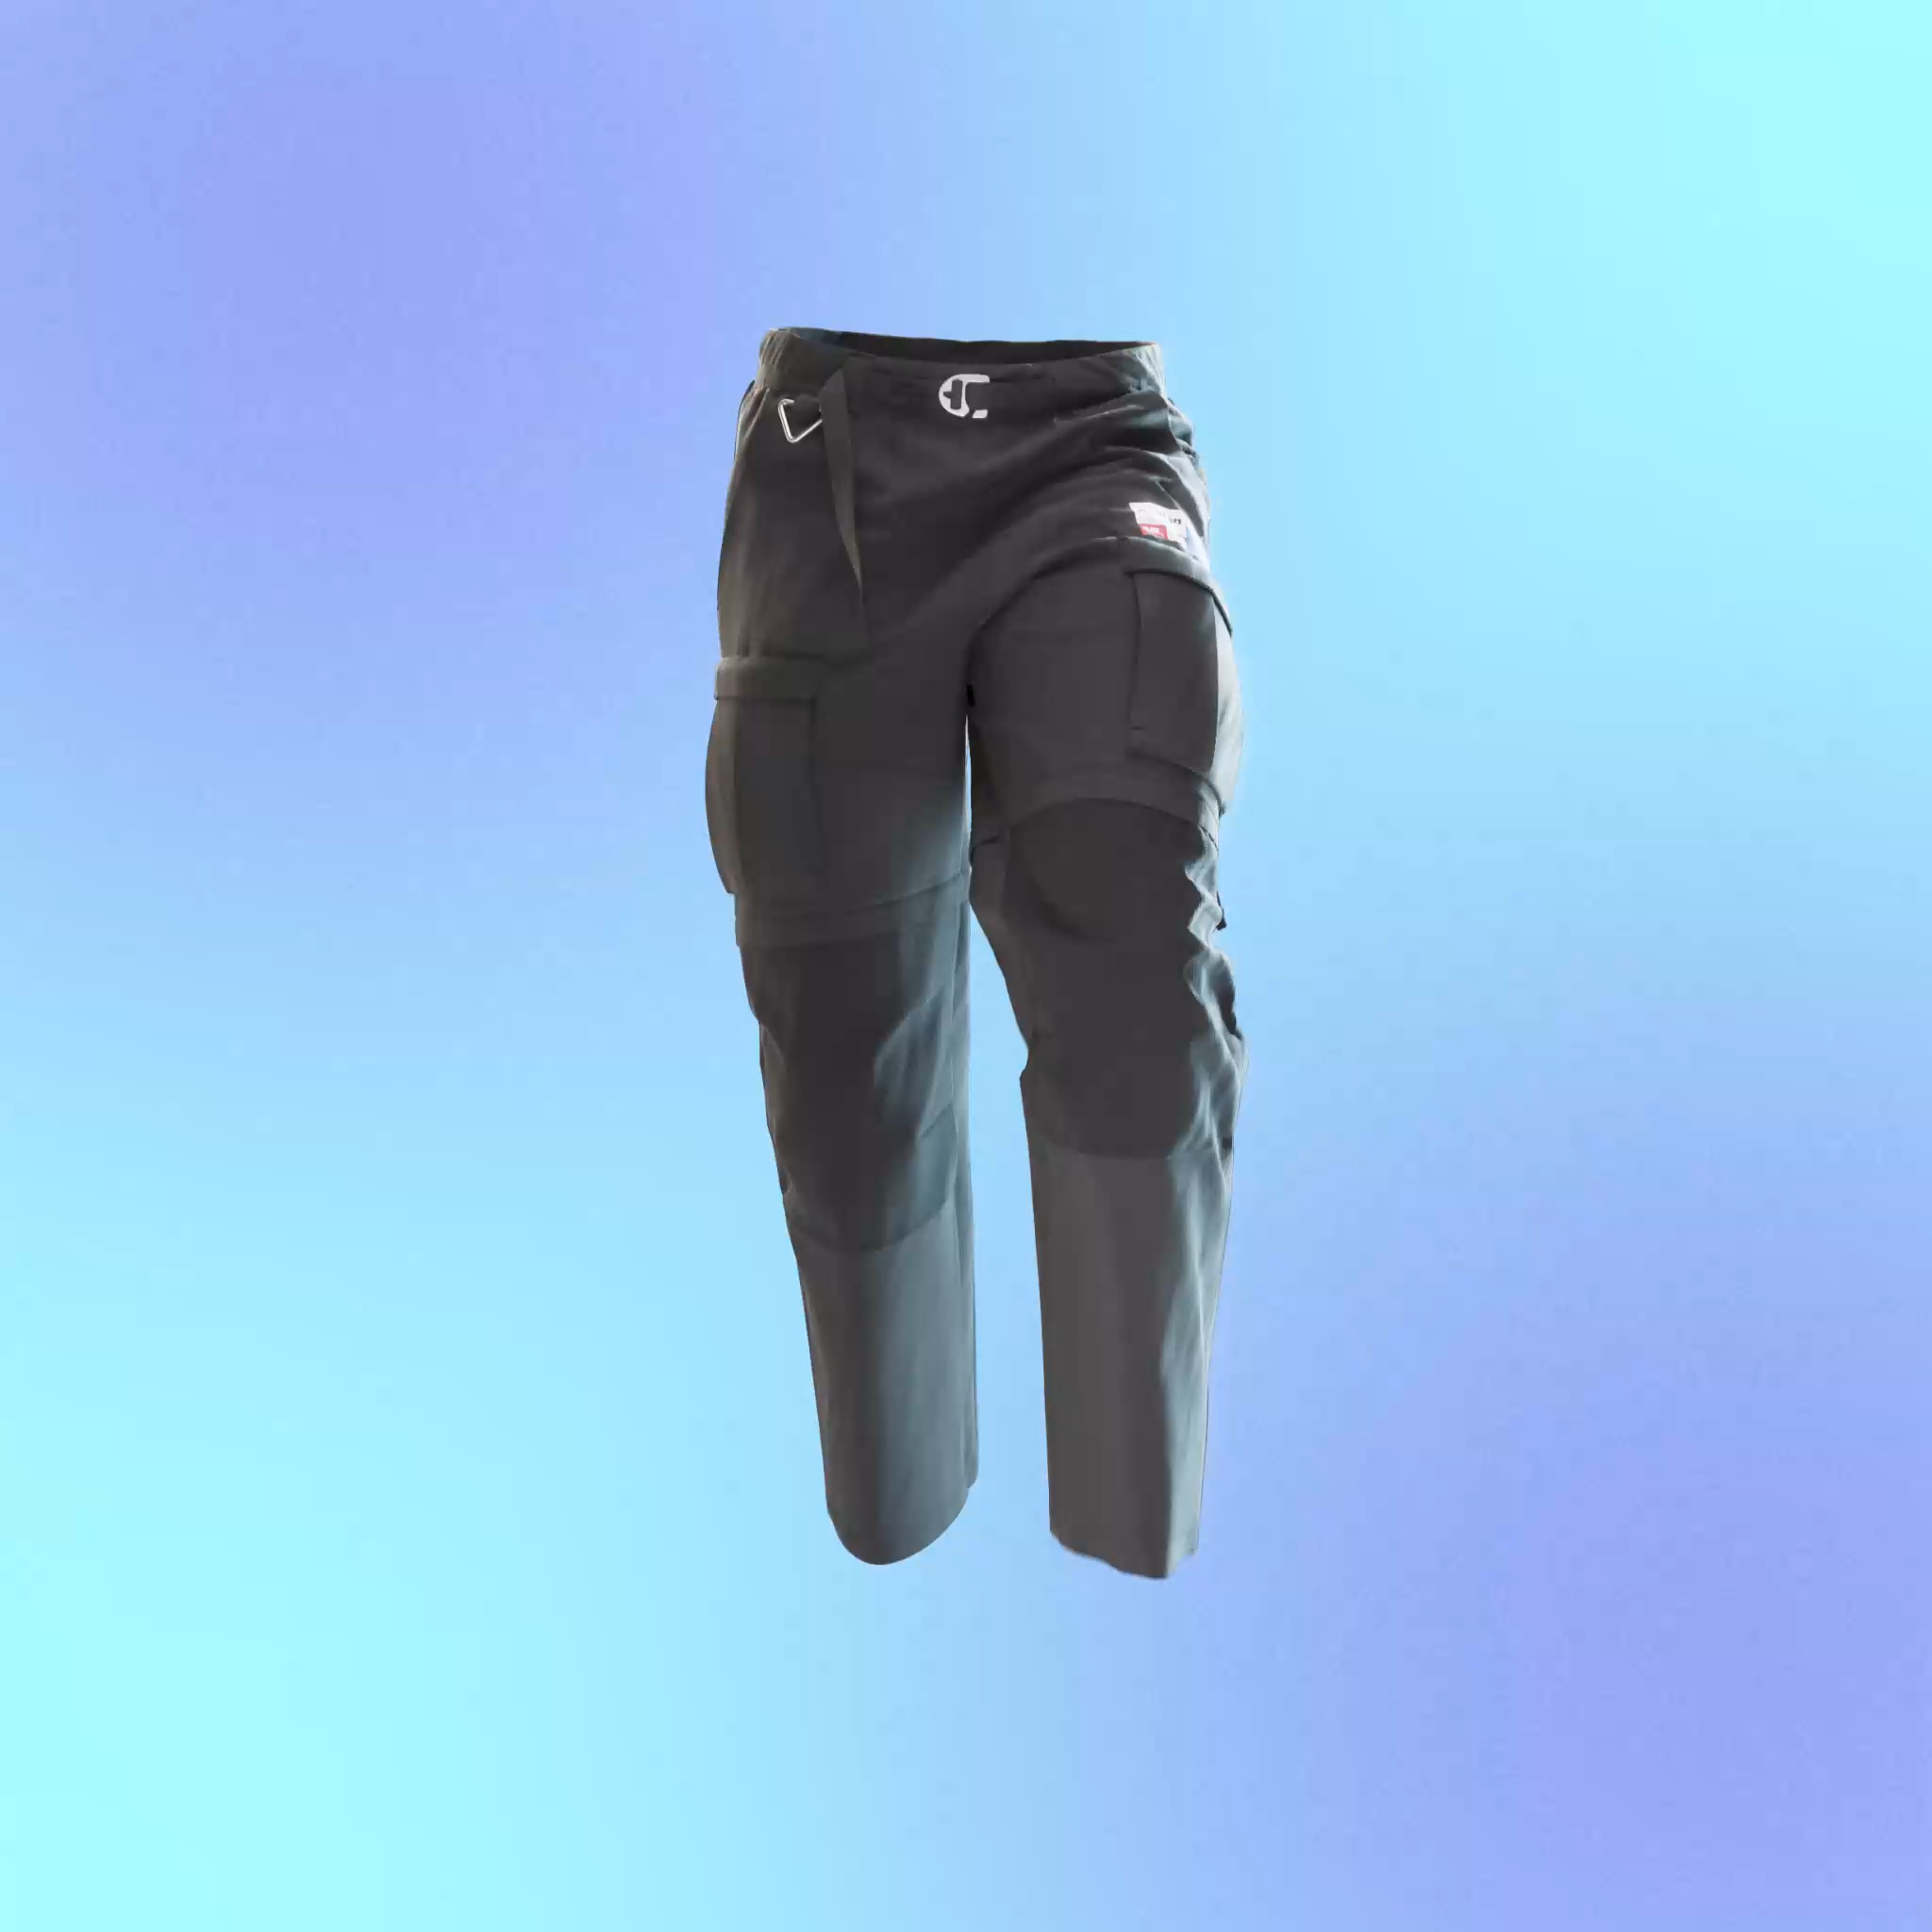 Human Pants 🖐